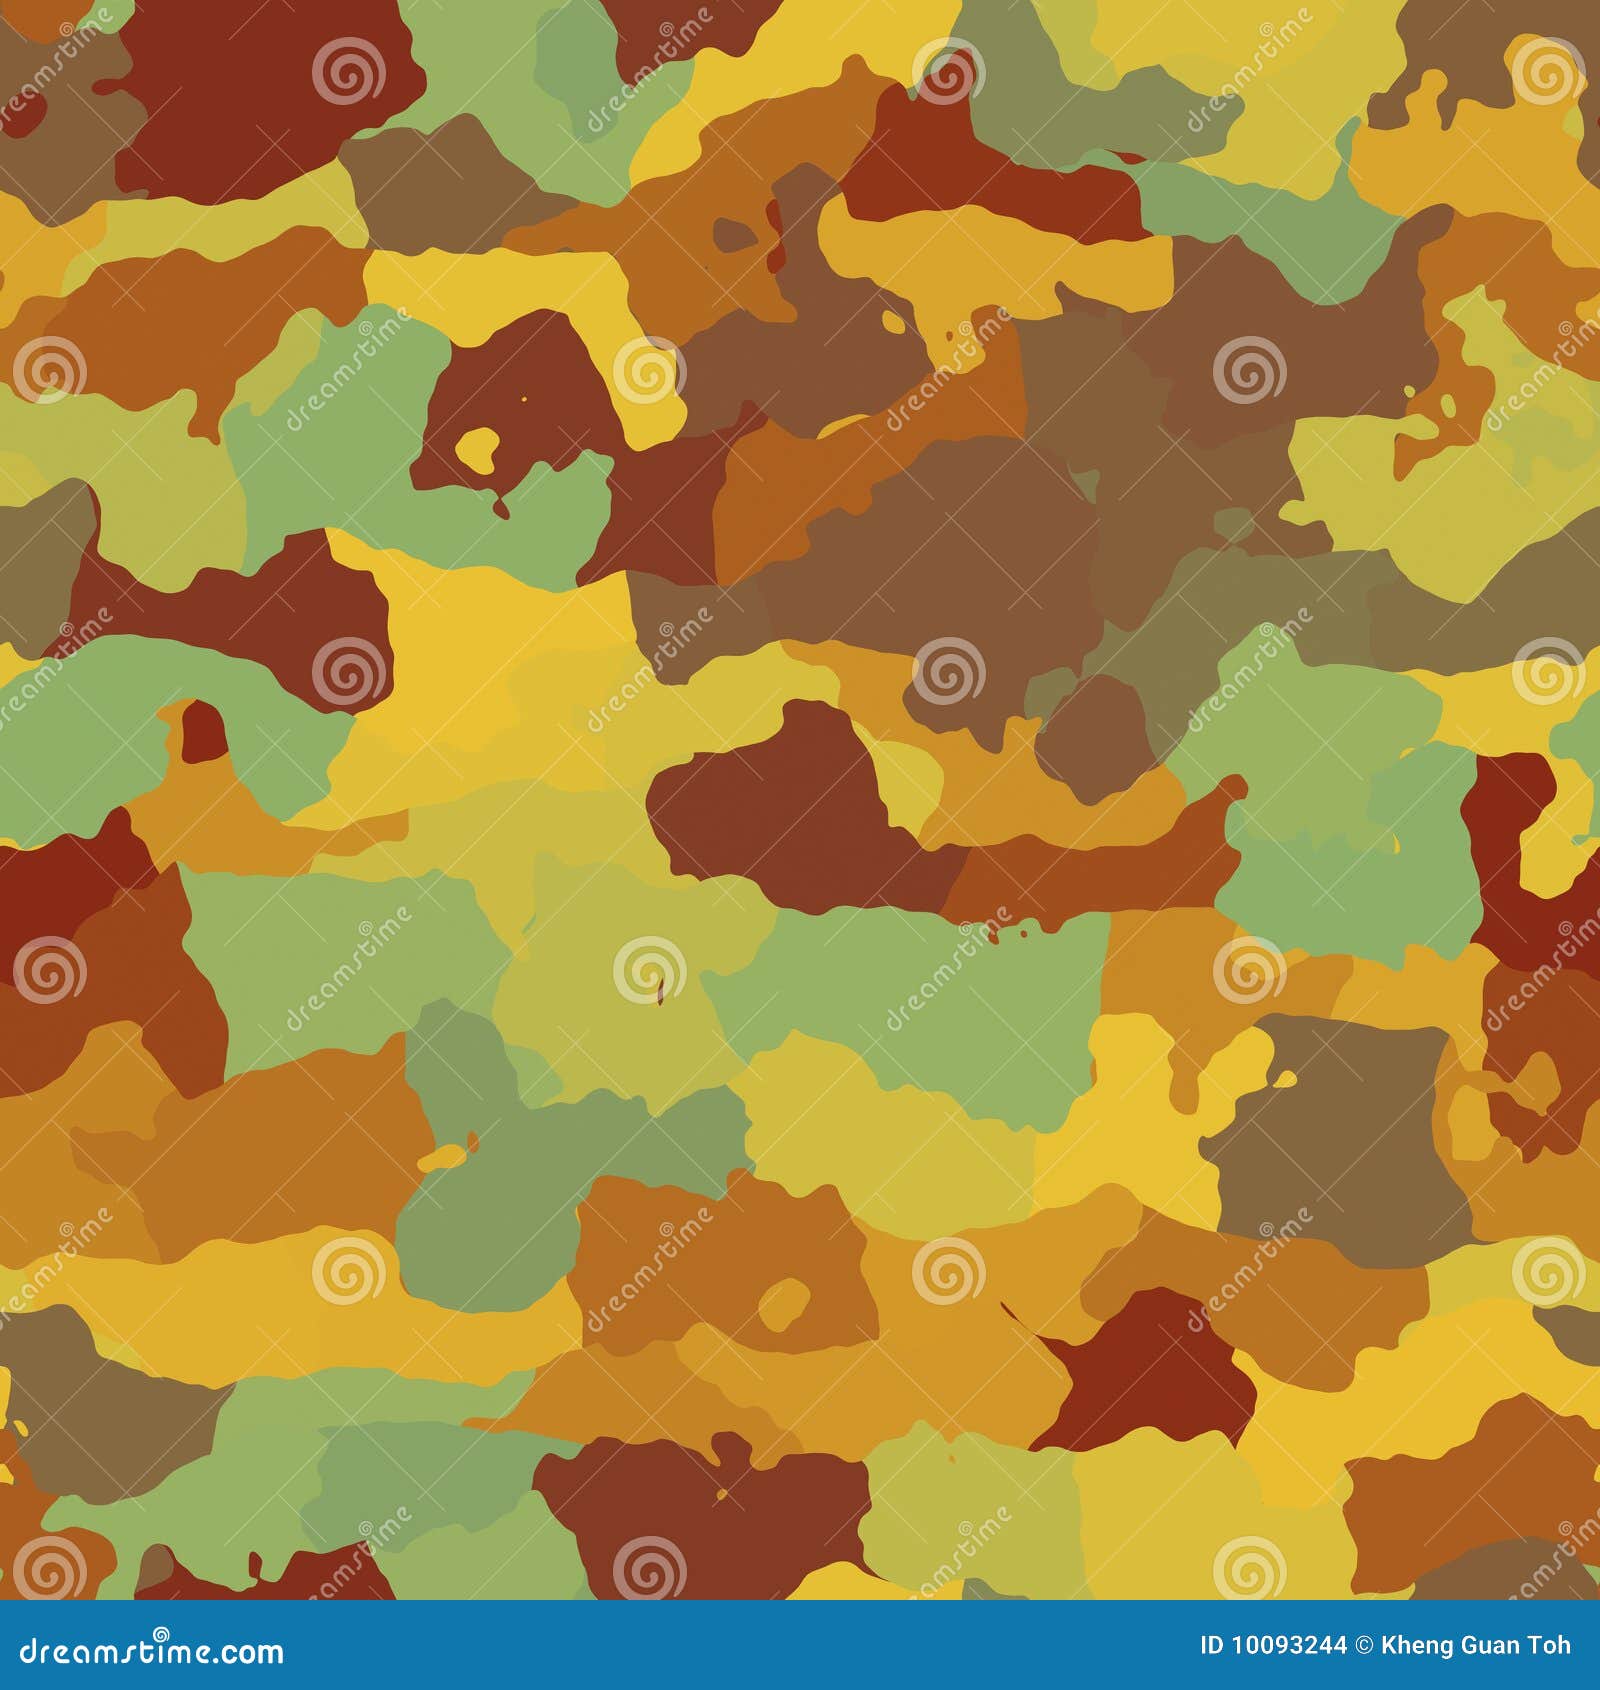 Camouflage pattern stock illustration. Illustration of seamlessly ...